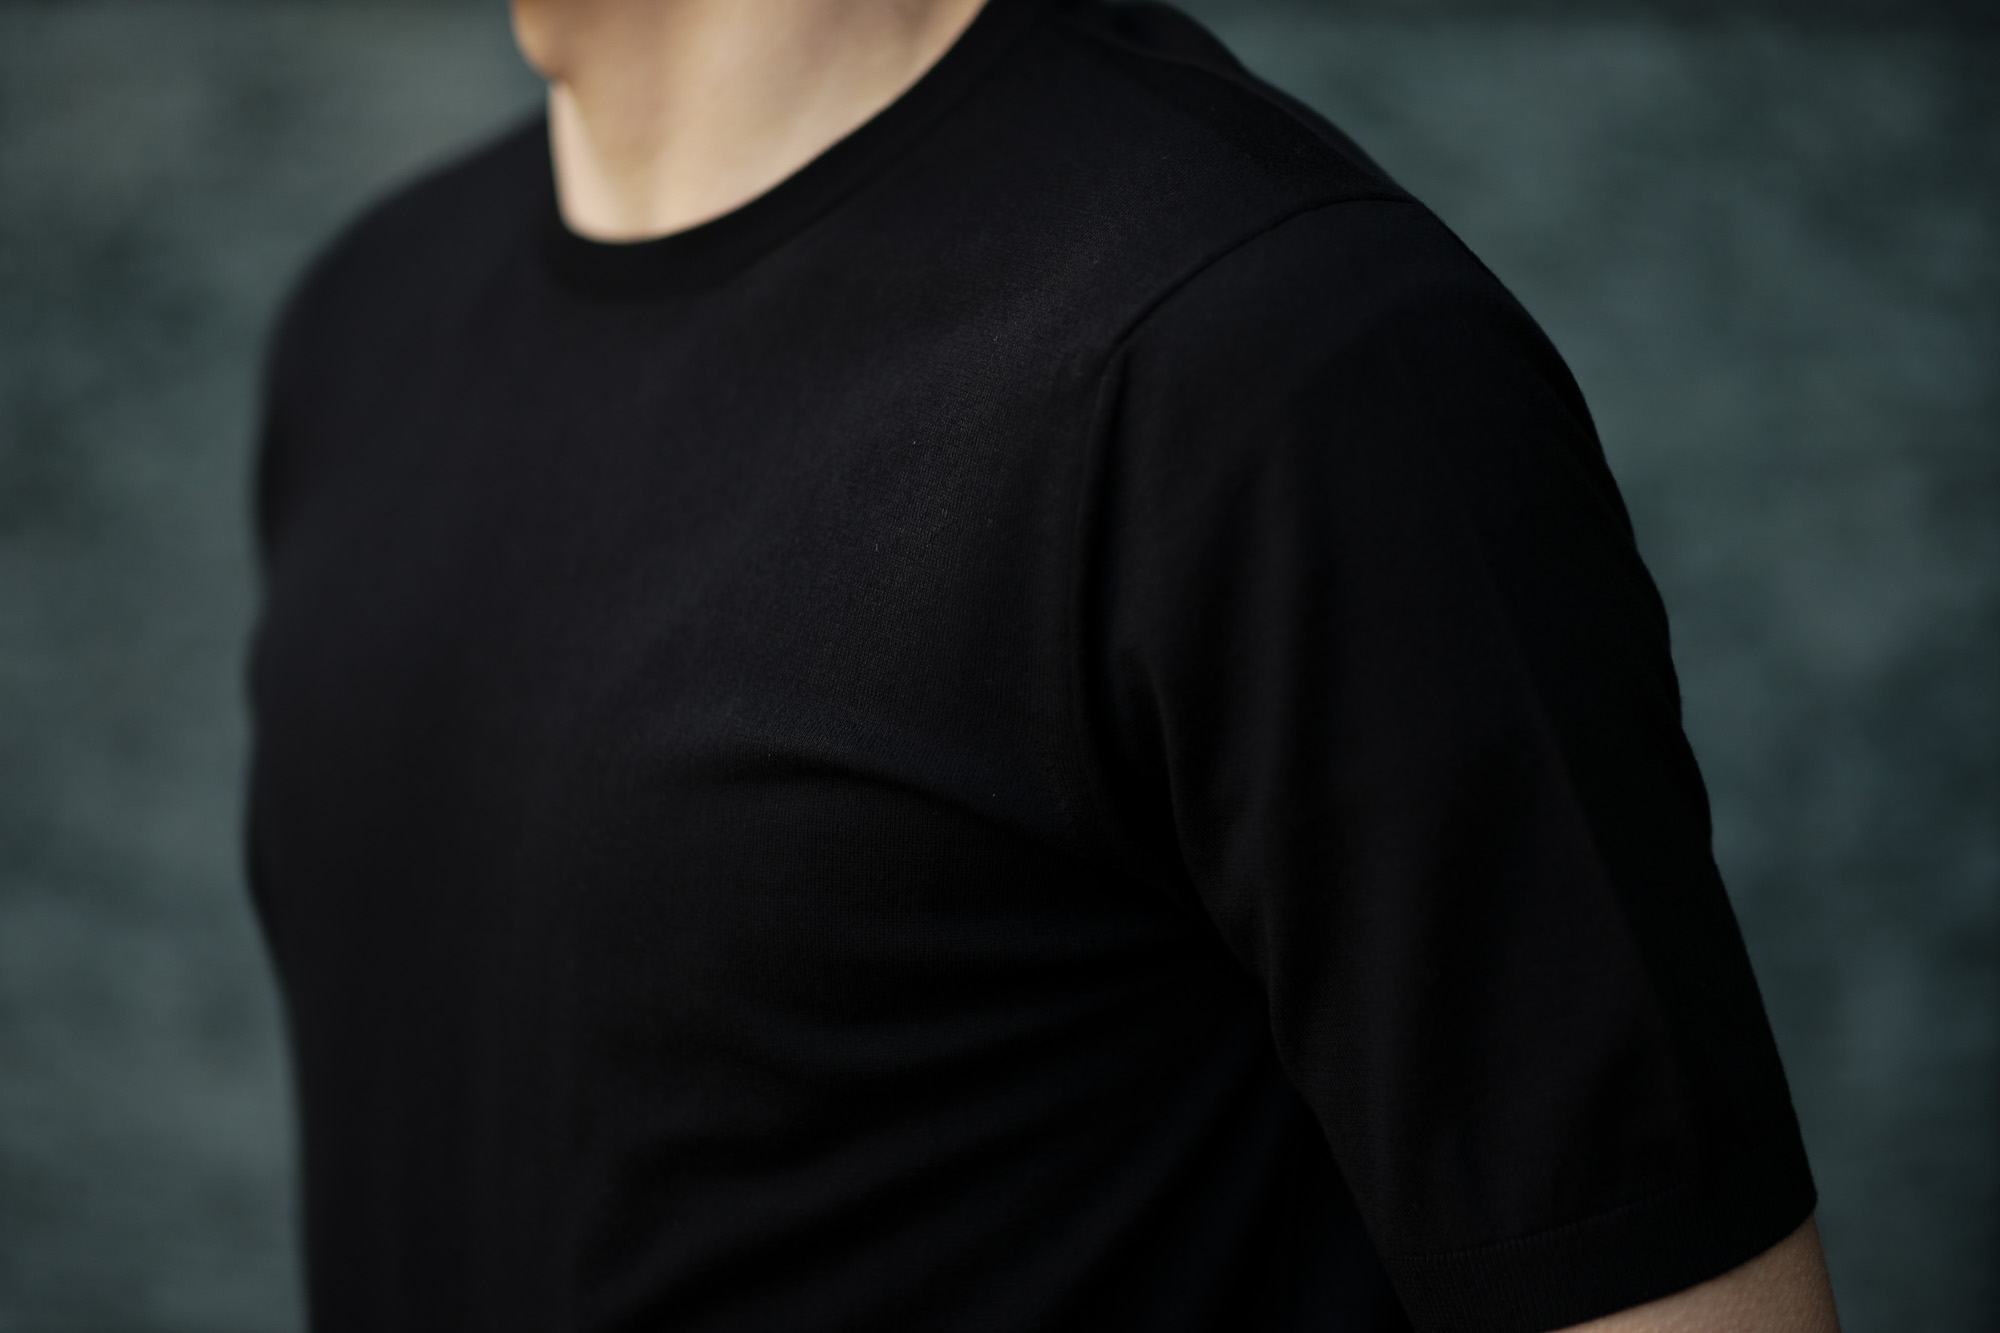 Cruciani(クルチアーニ) 33G Knit T-shirt 33ゲージ コットン ニット Tシャツ BLACK (ブラック・Z0048)  made in italy (イタリア製) 2020 春夏新作 愛知 名古屋 altoediritto アルトエデリット ニットTEE